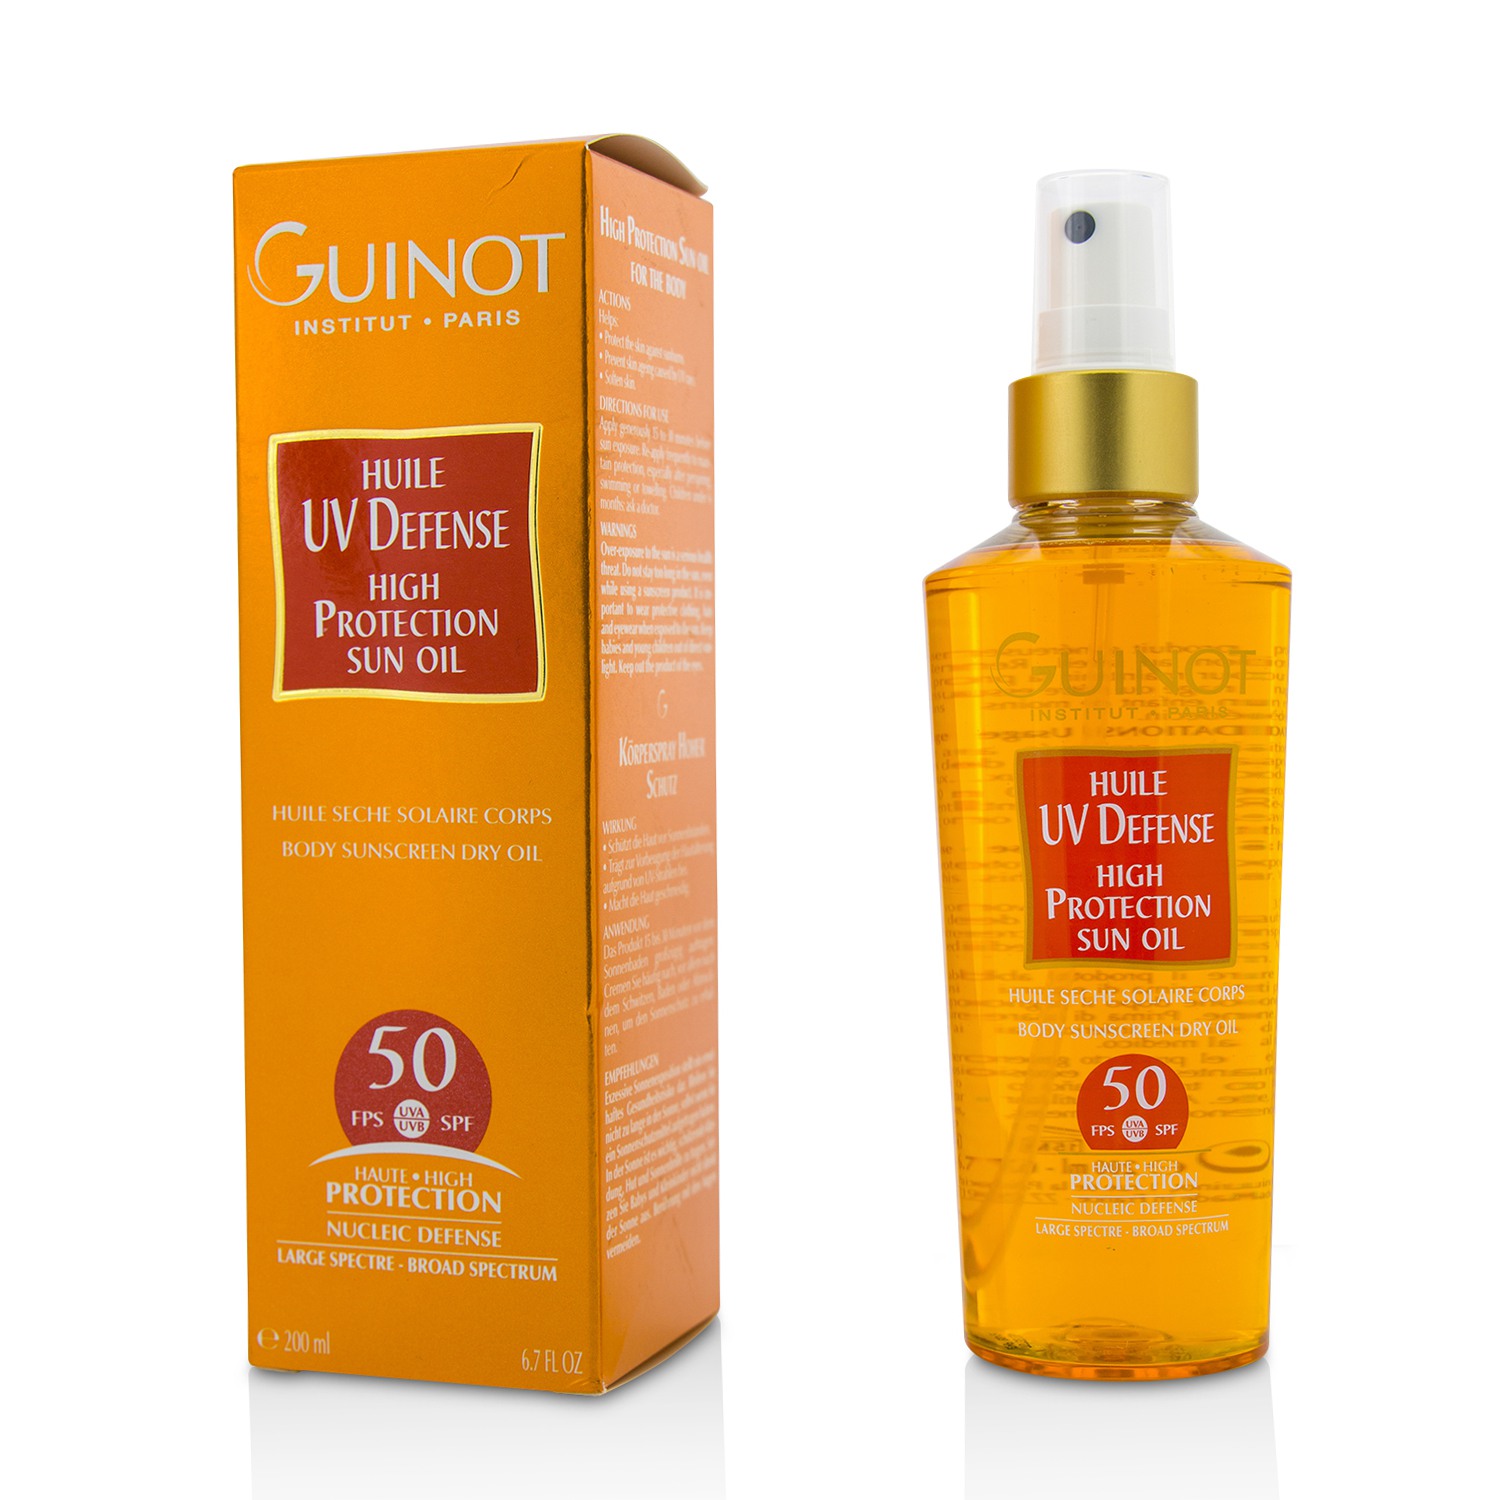 Huile UV Defense High Protection Body Sunscreen Dry Oil SPF50 Guinot Image